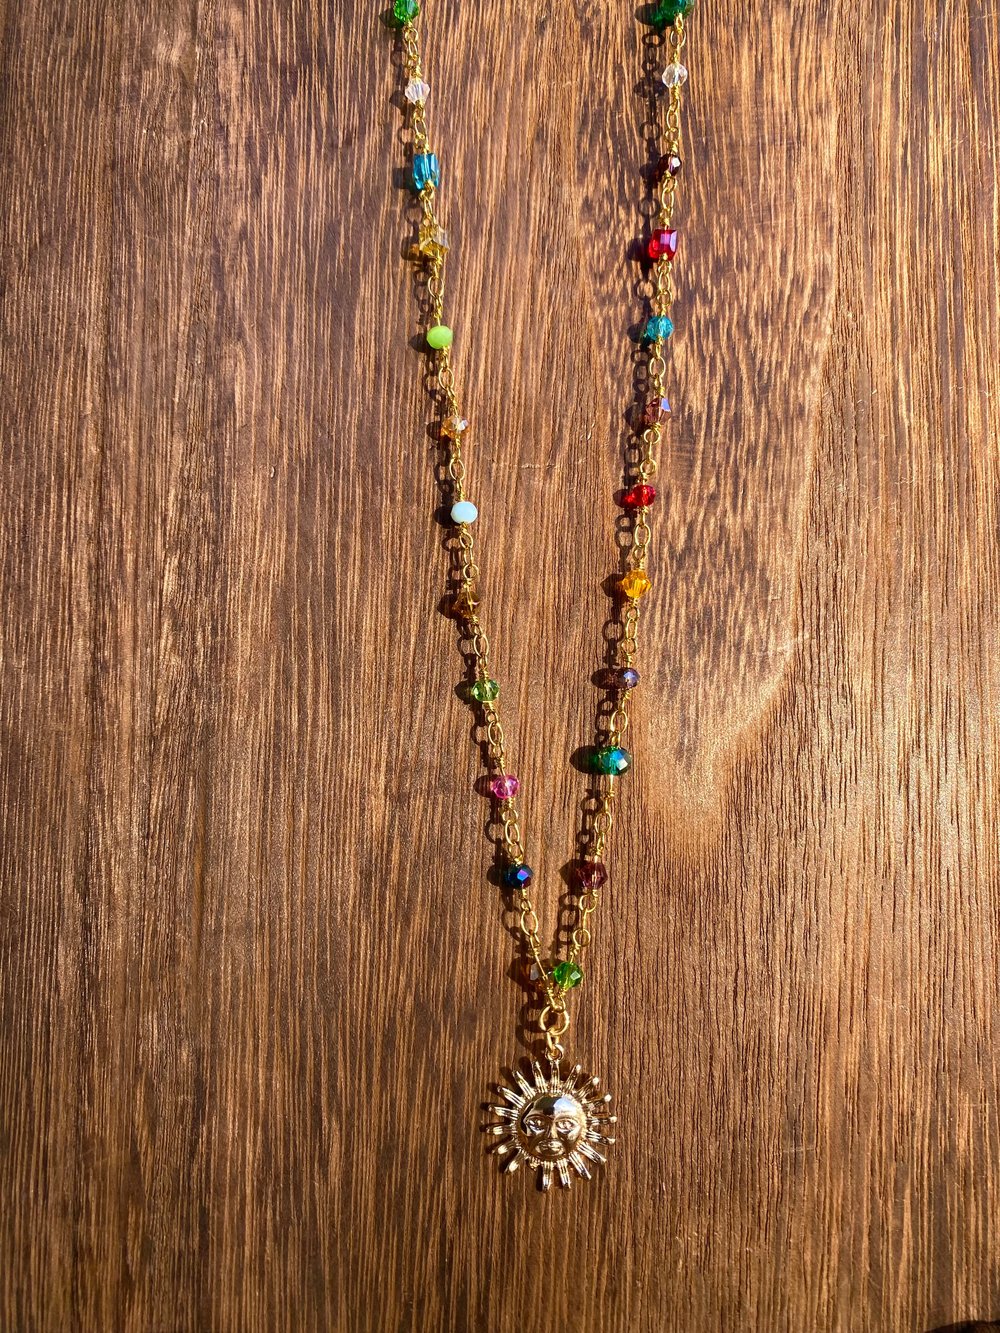 sun chakra necklaces